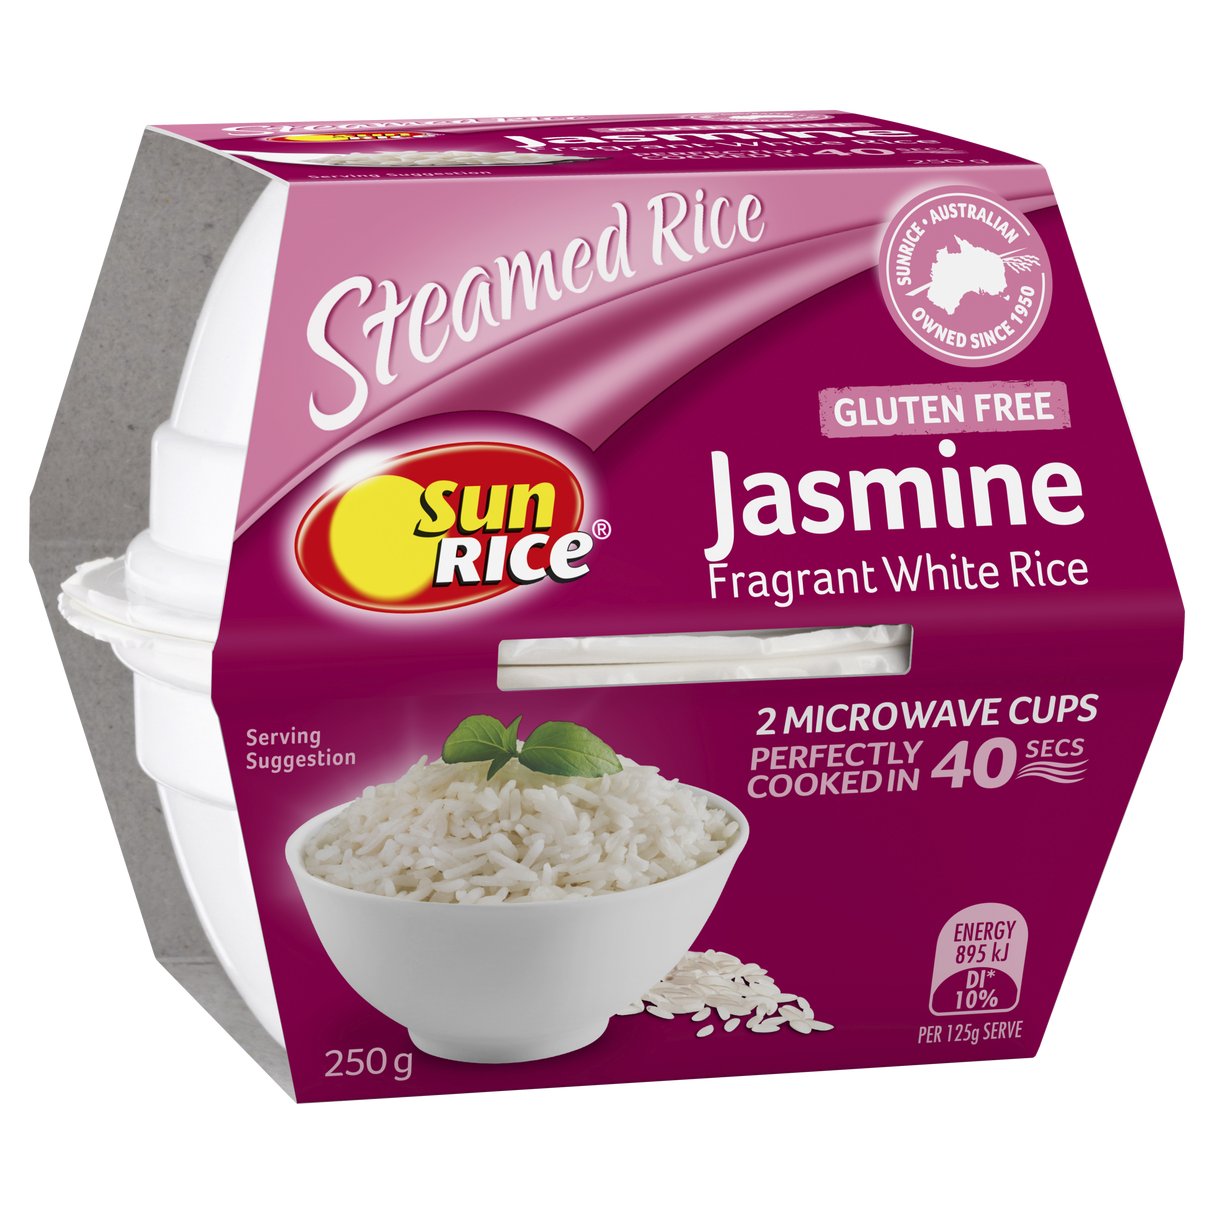 SunRice Steamed Rice Jasmine Rice Cups 125g 2 Pack